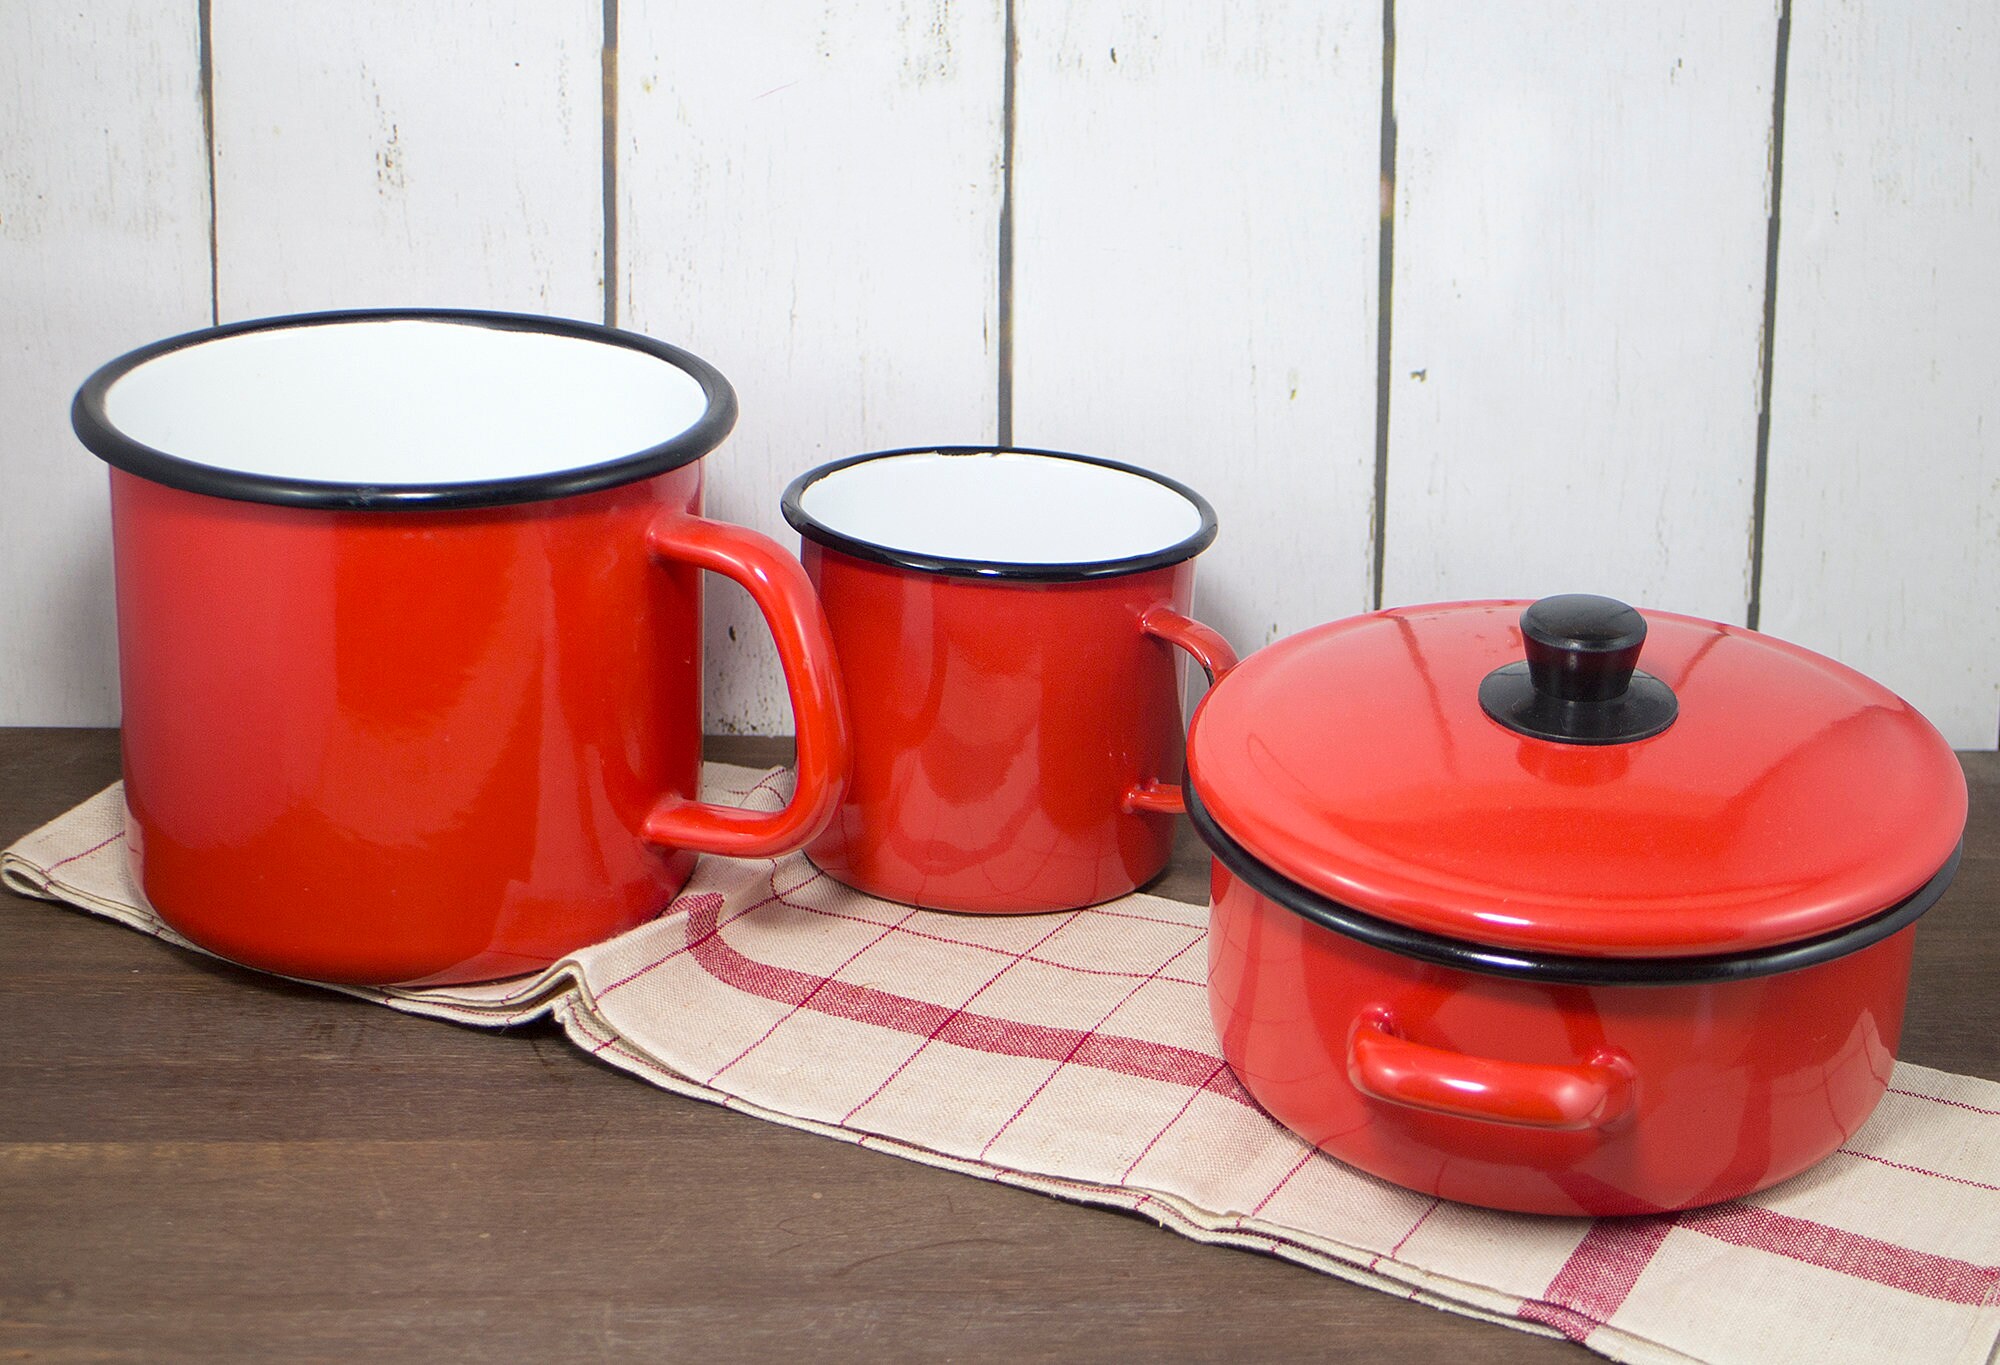 Vintage Brown Small Saucepan Enamel Pot With Lid Small Sauce Pot With  Handle Enameled Cooking Pot Enamelware Rustic Farmhouse Cottage Decor 